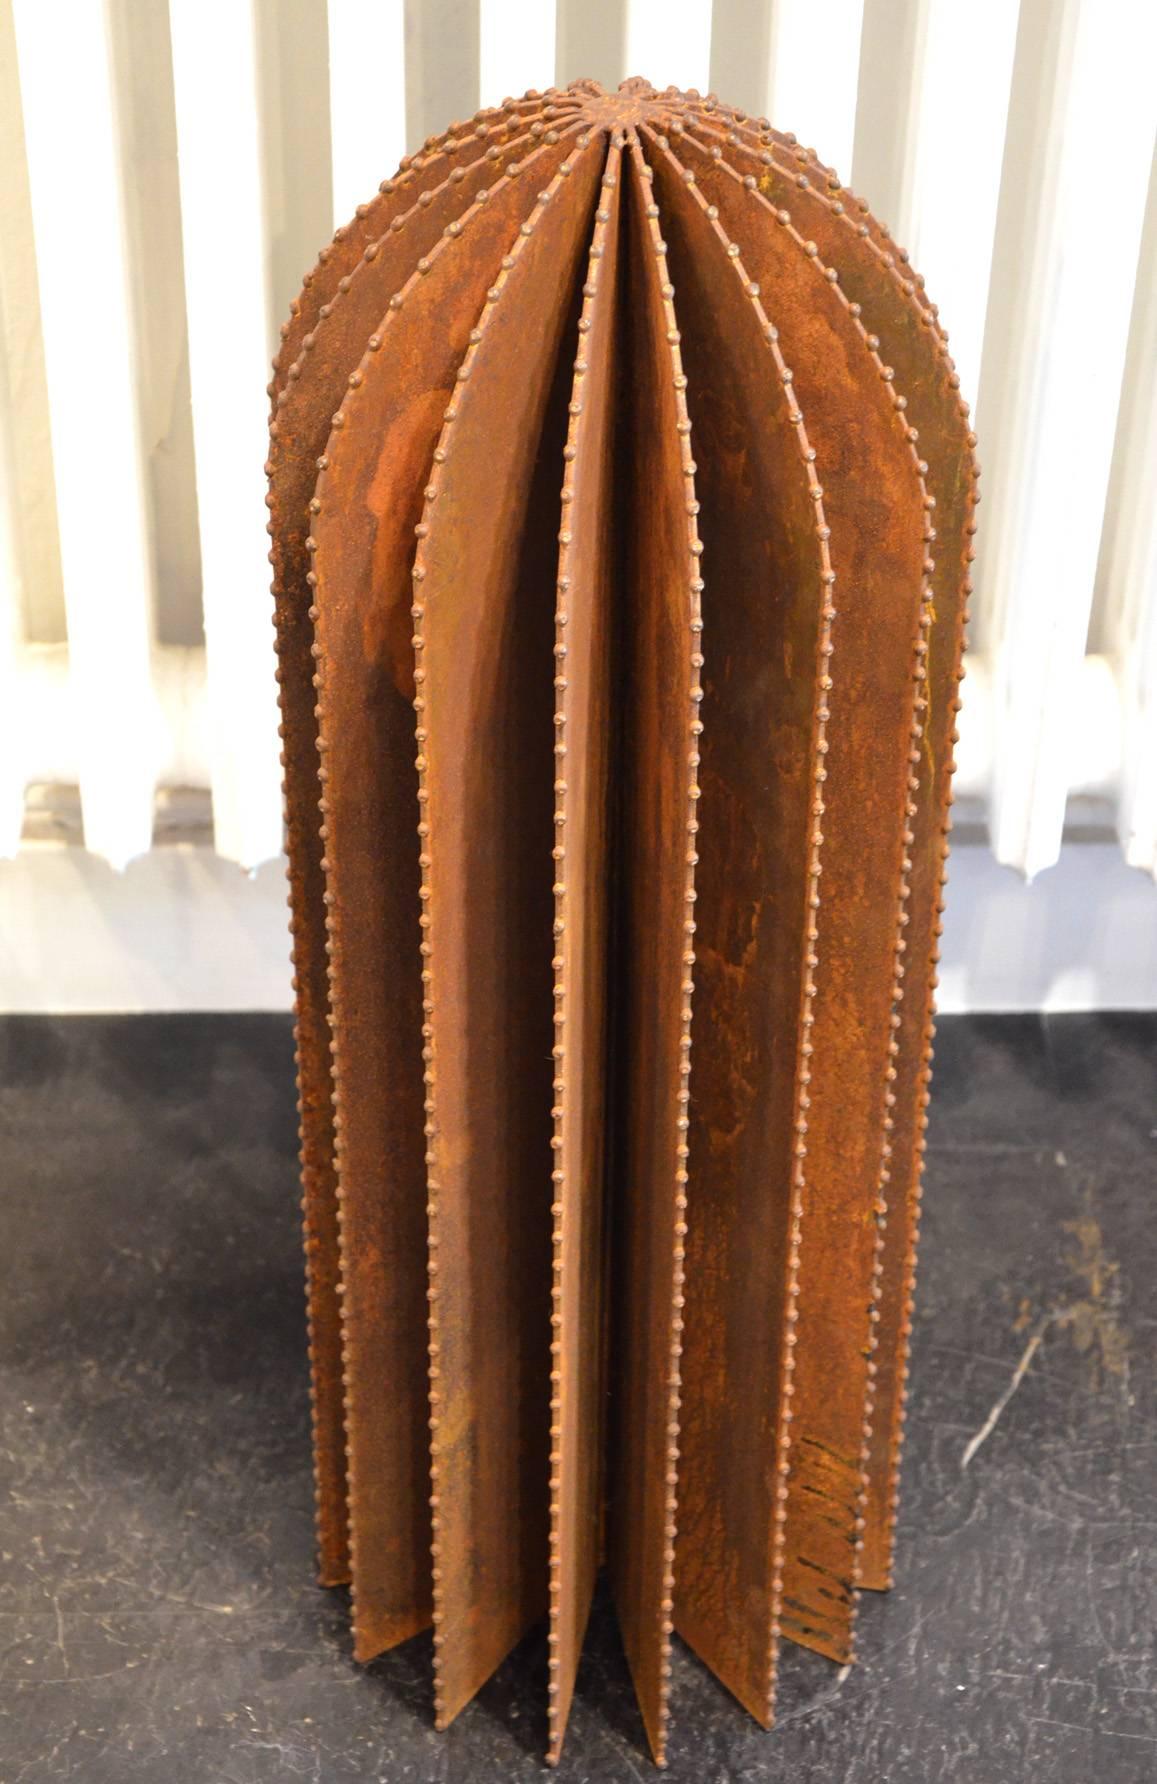 Huge Arizona rusty steel cactus designed by French designer FD63.